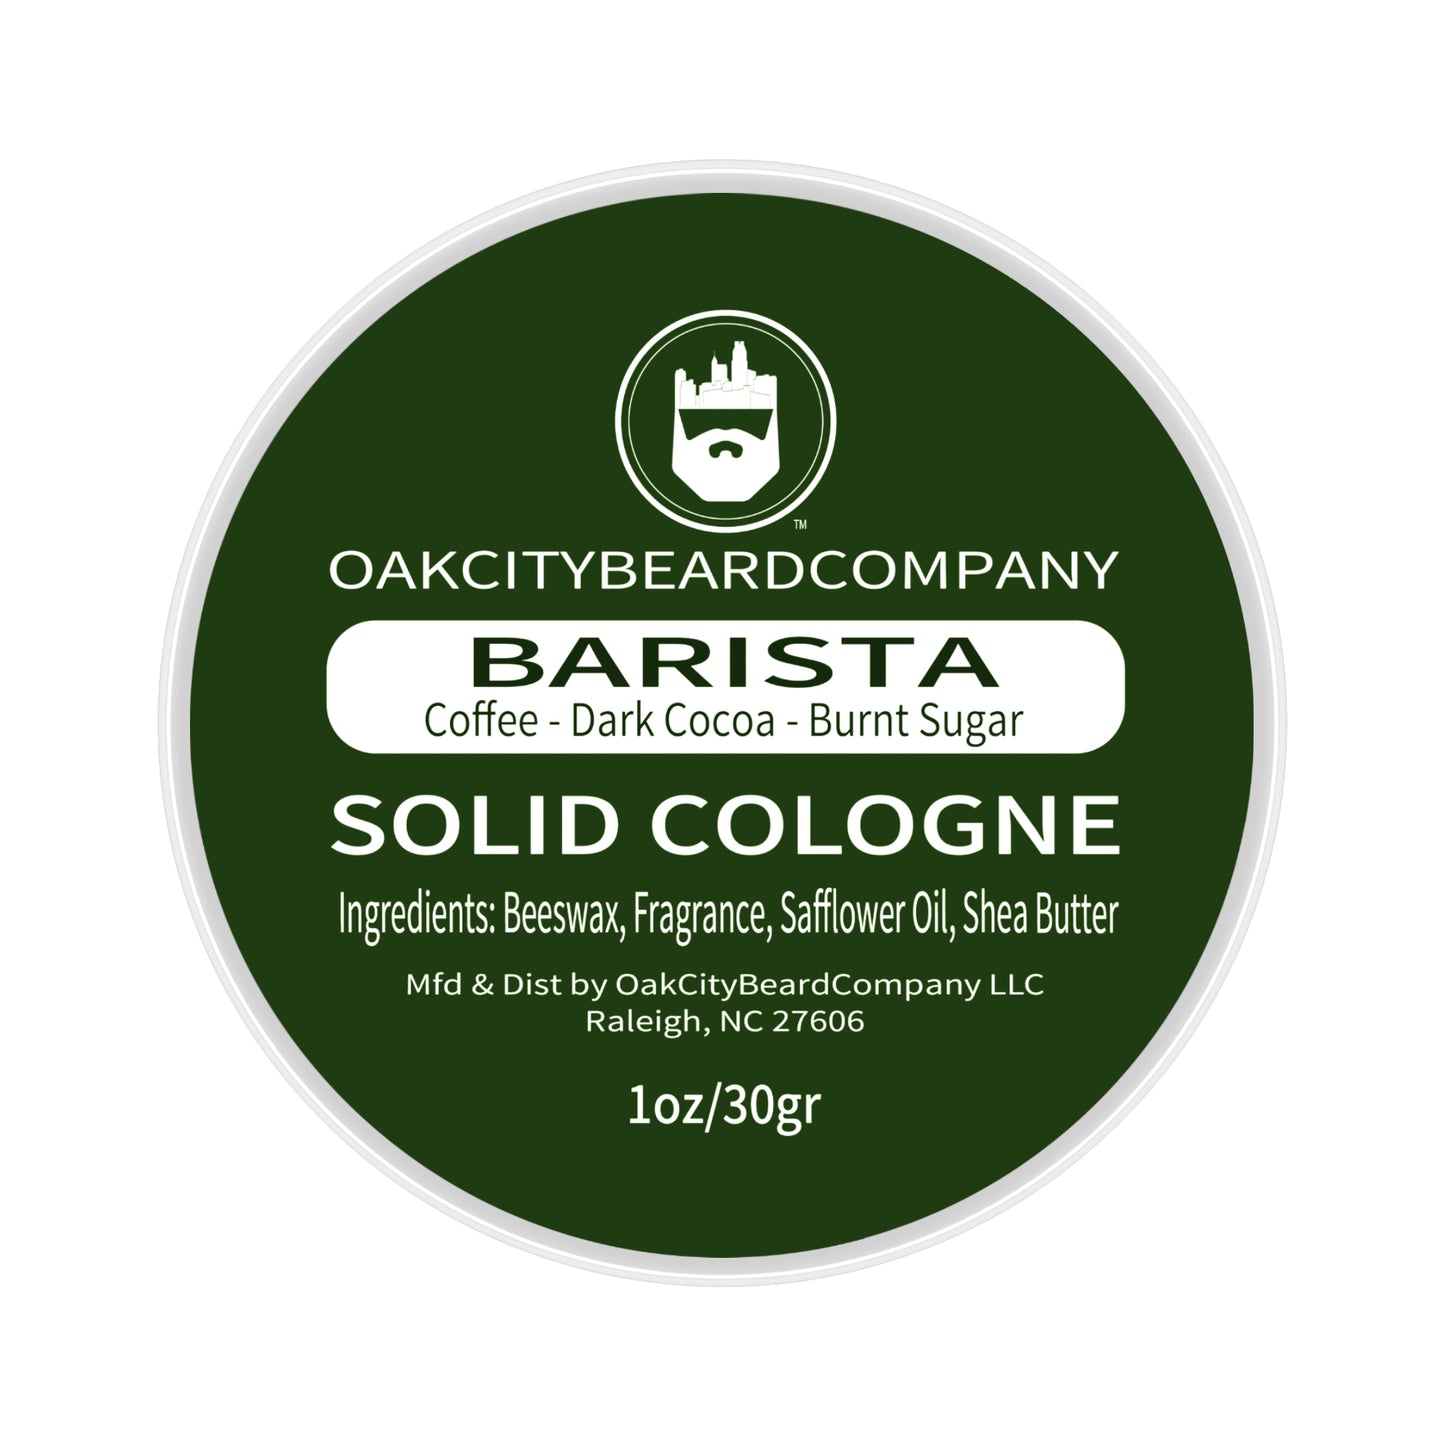 Barista (Solid Cologne) by Oak City Beard Company